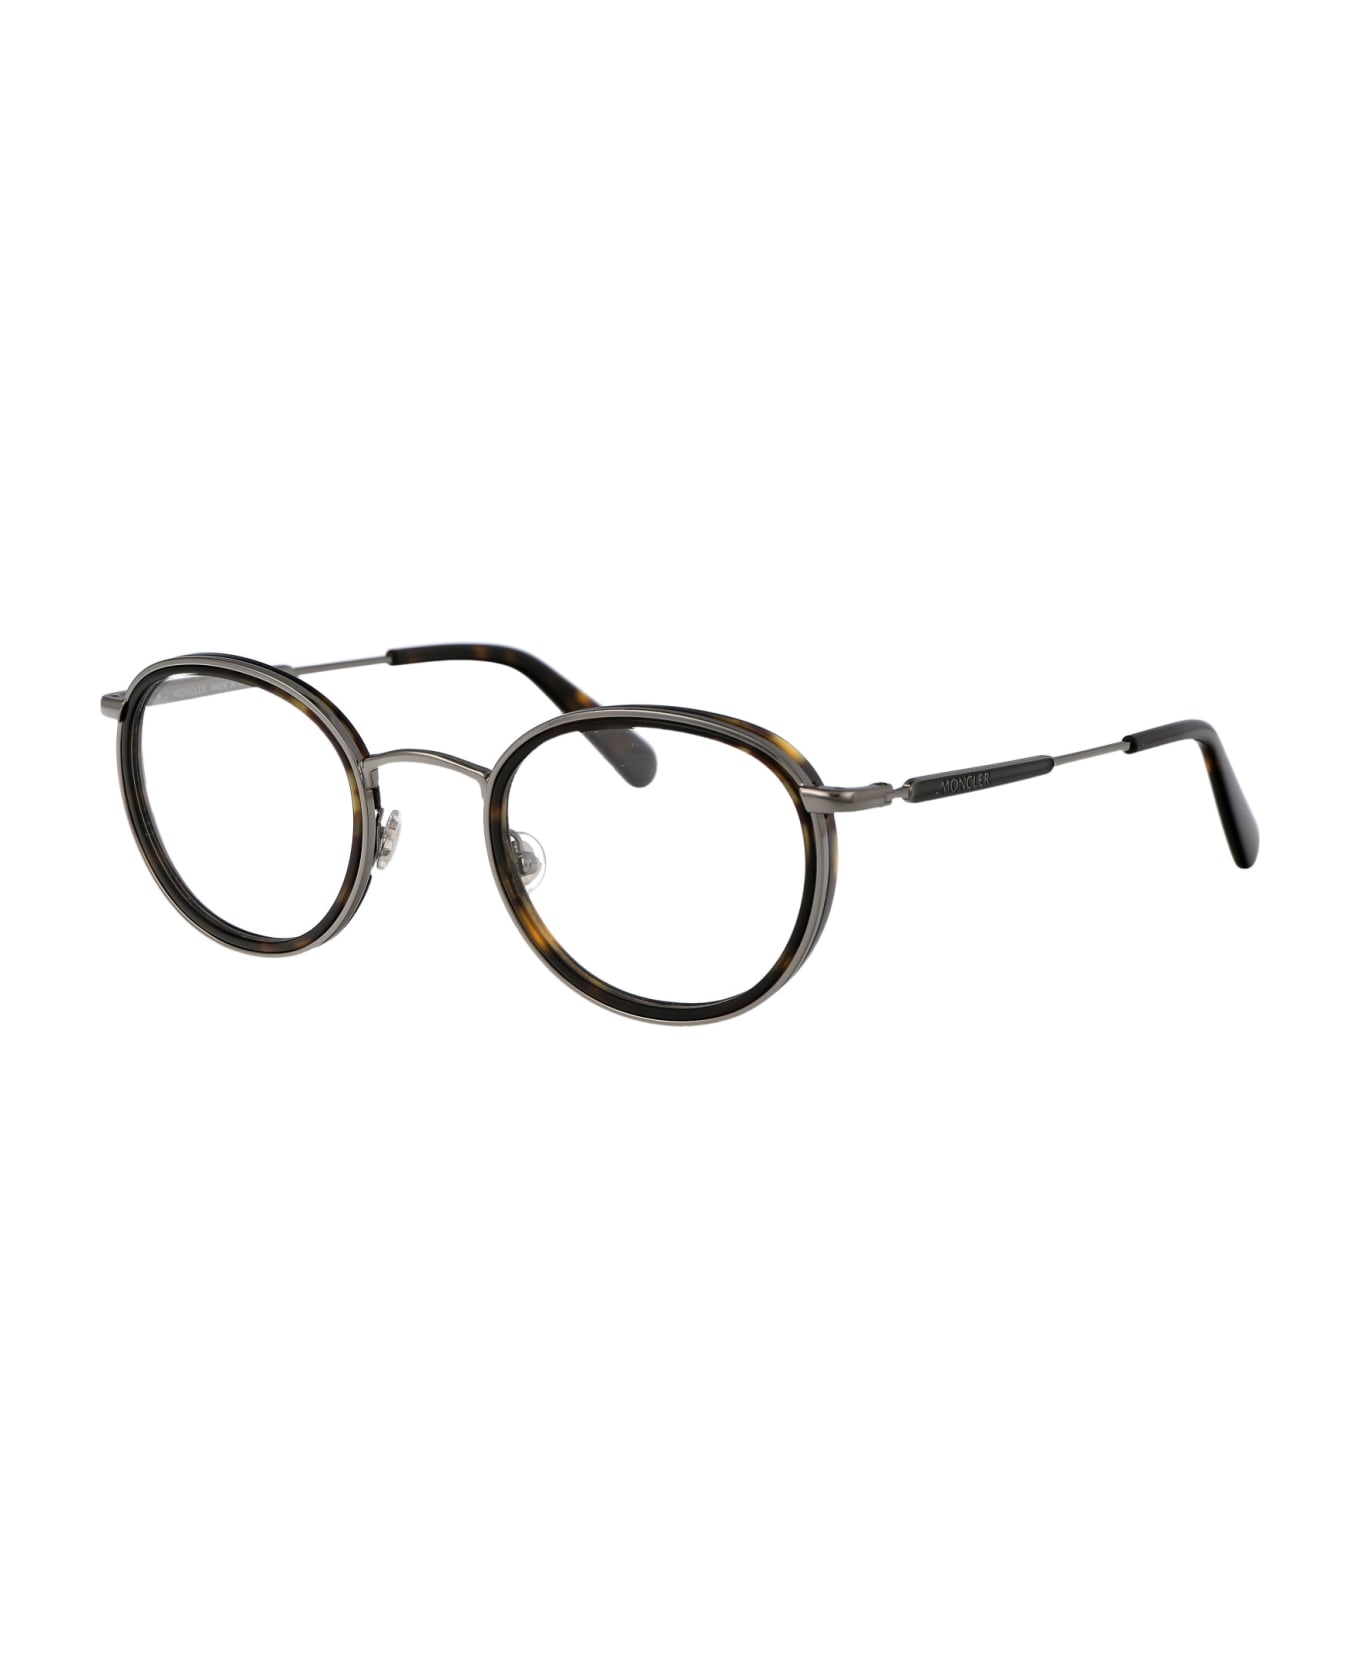 Moncler Eyewear Ml5153 Glasses - 052 Avana Scura